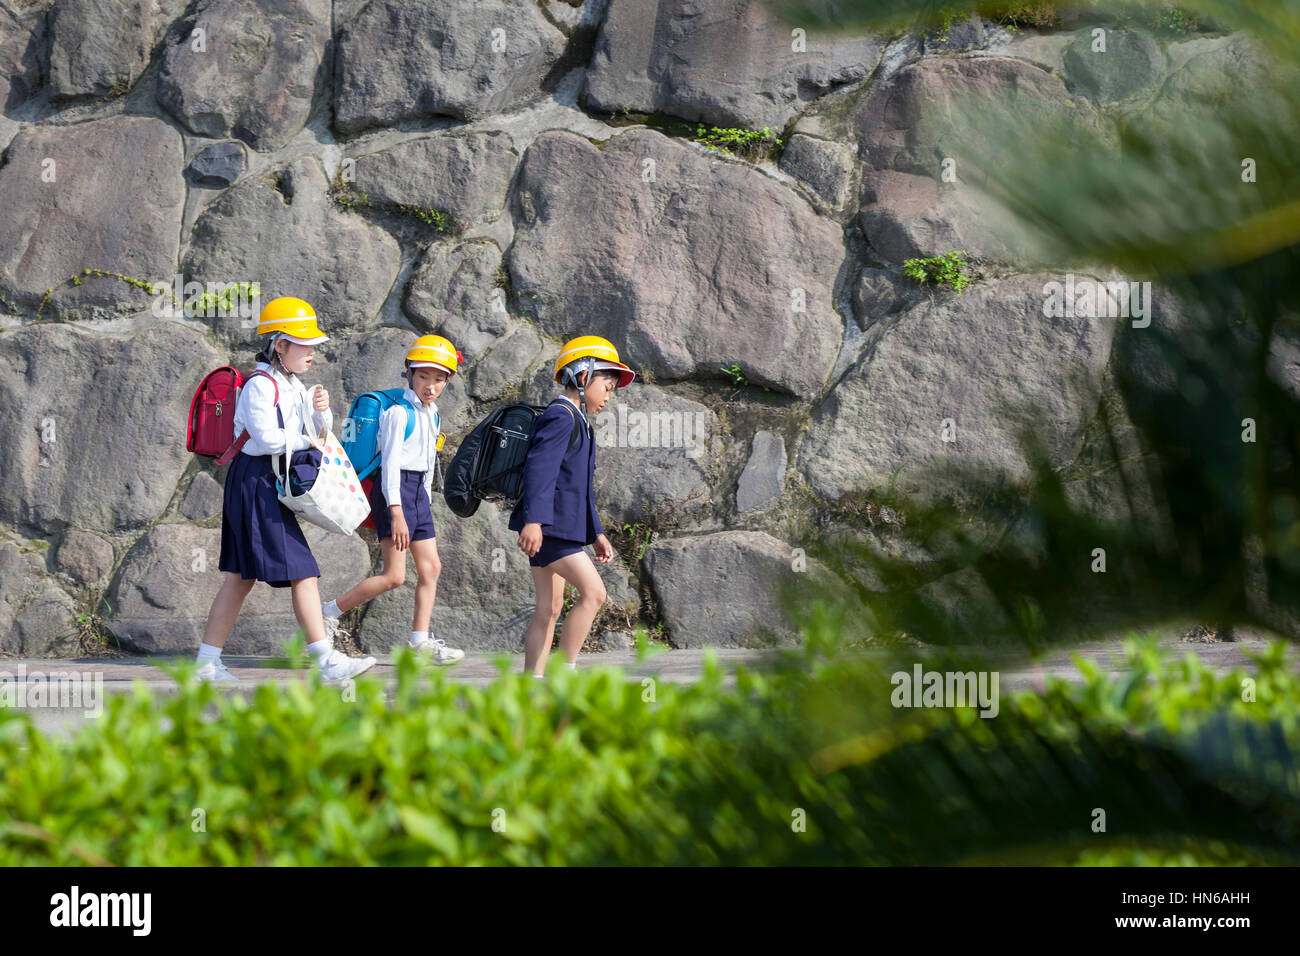 Sakura-jima, Japan - April 23, 2012: Three schoolchildren walk home wearing hard hats to protect against potentially dangerous debris from Sakura-jima Stock Photo